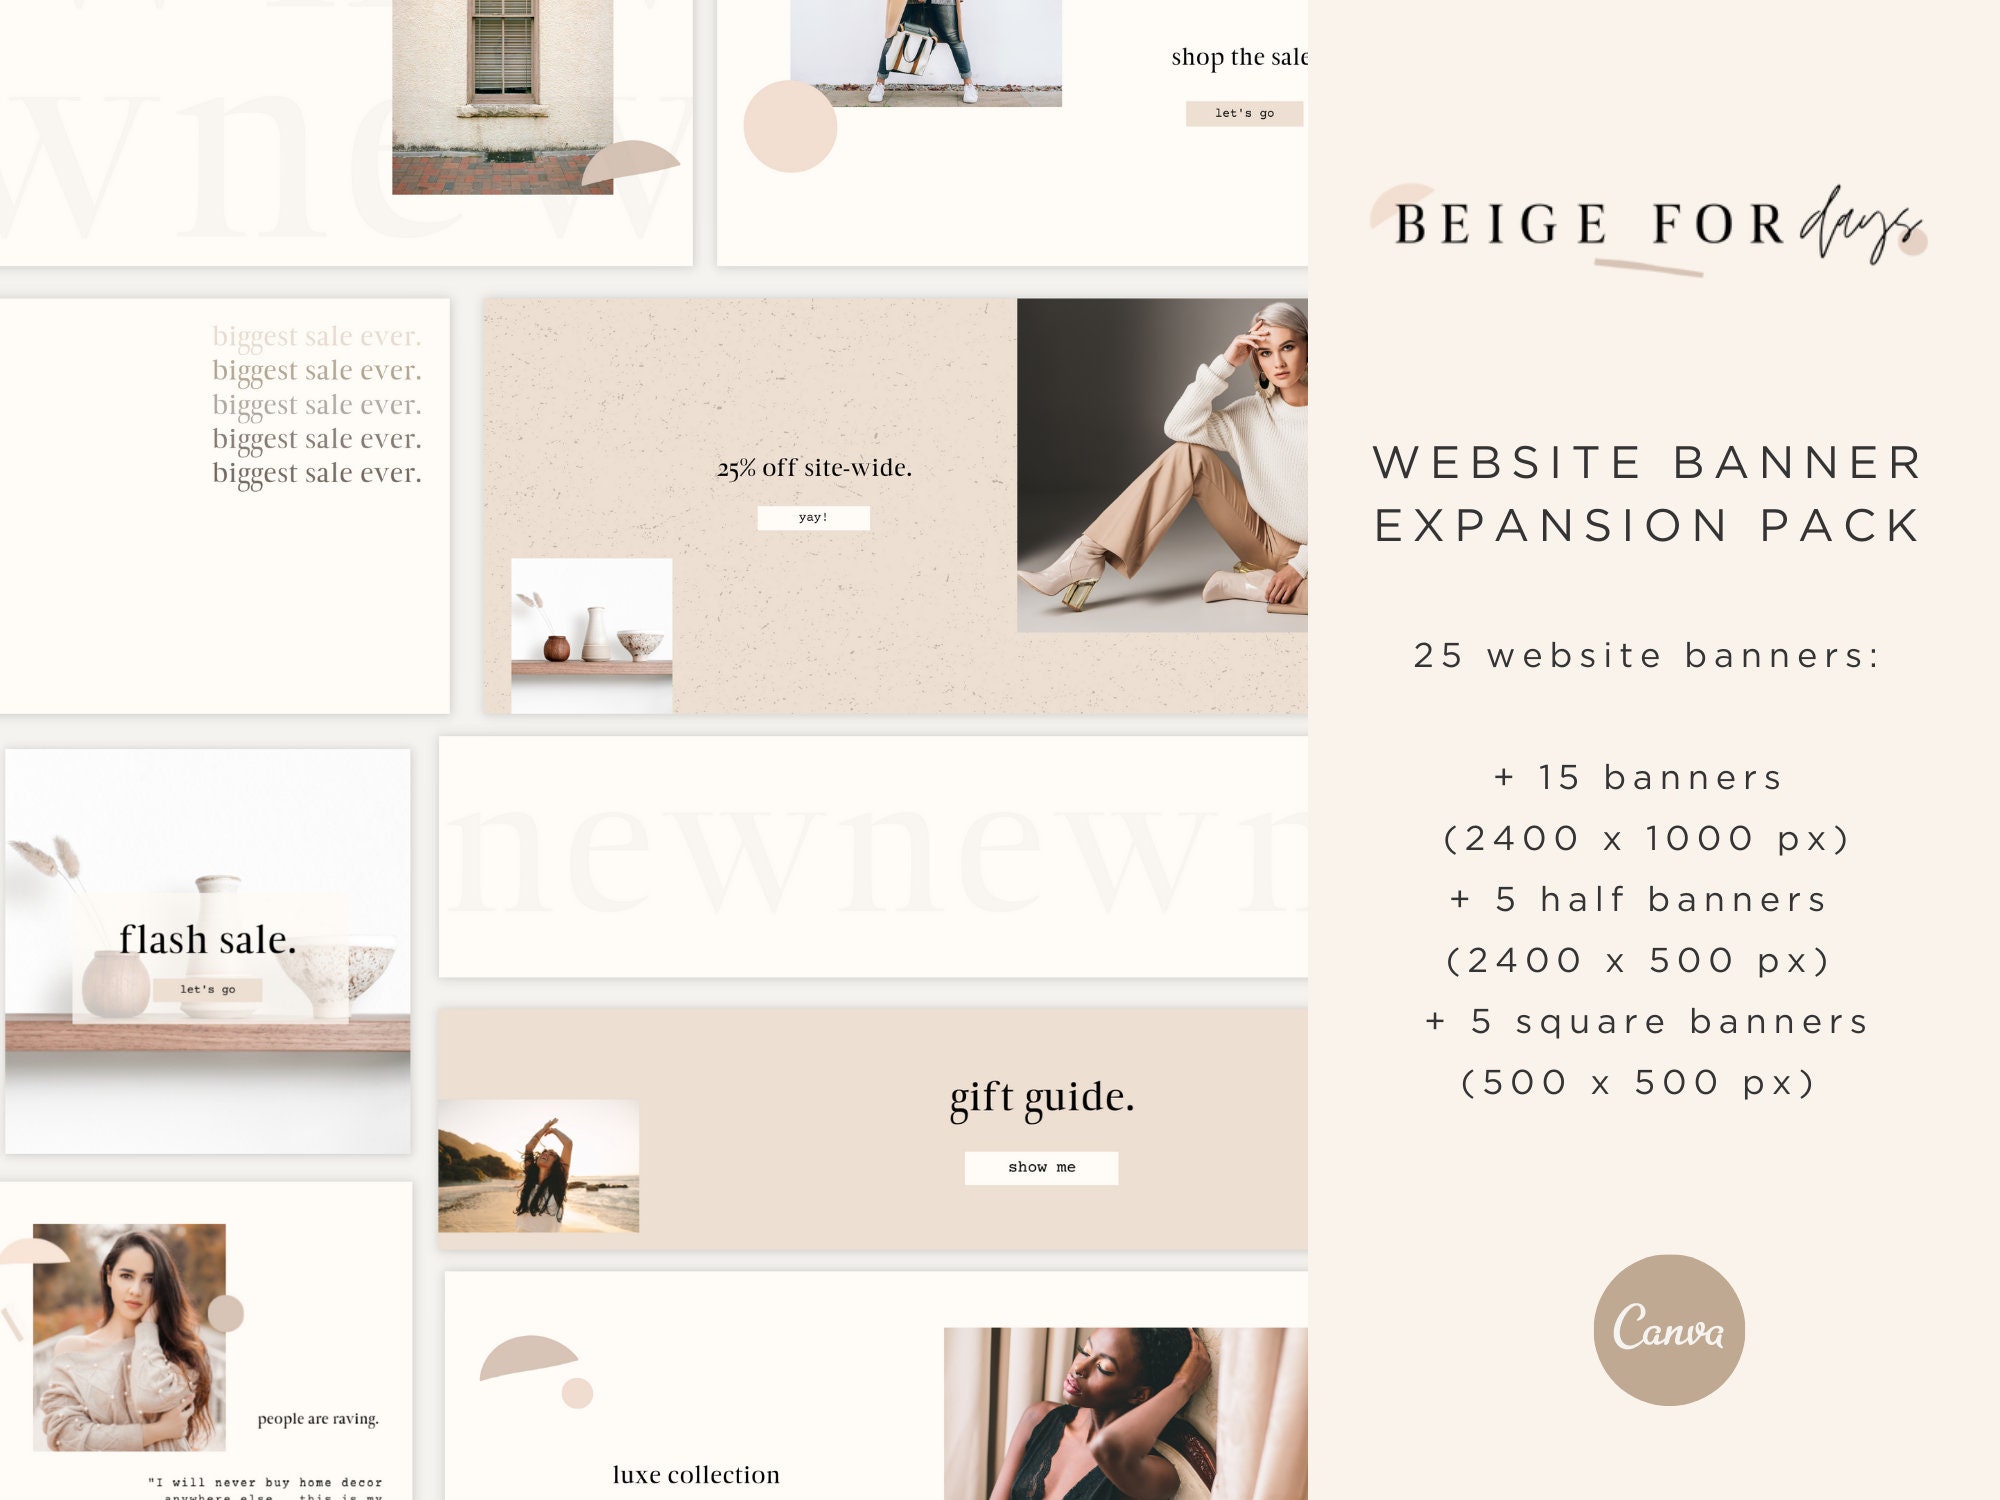 Boho Shopify Theme Customizable Neutral Shopify Website Design Video Tutorials Editable Canva banners